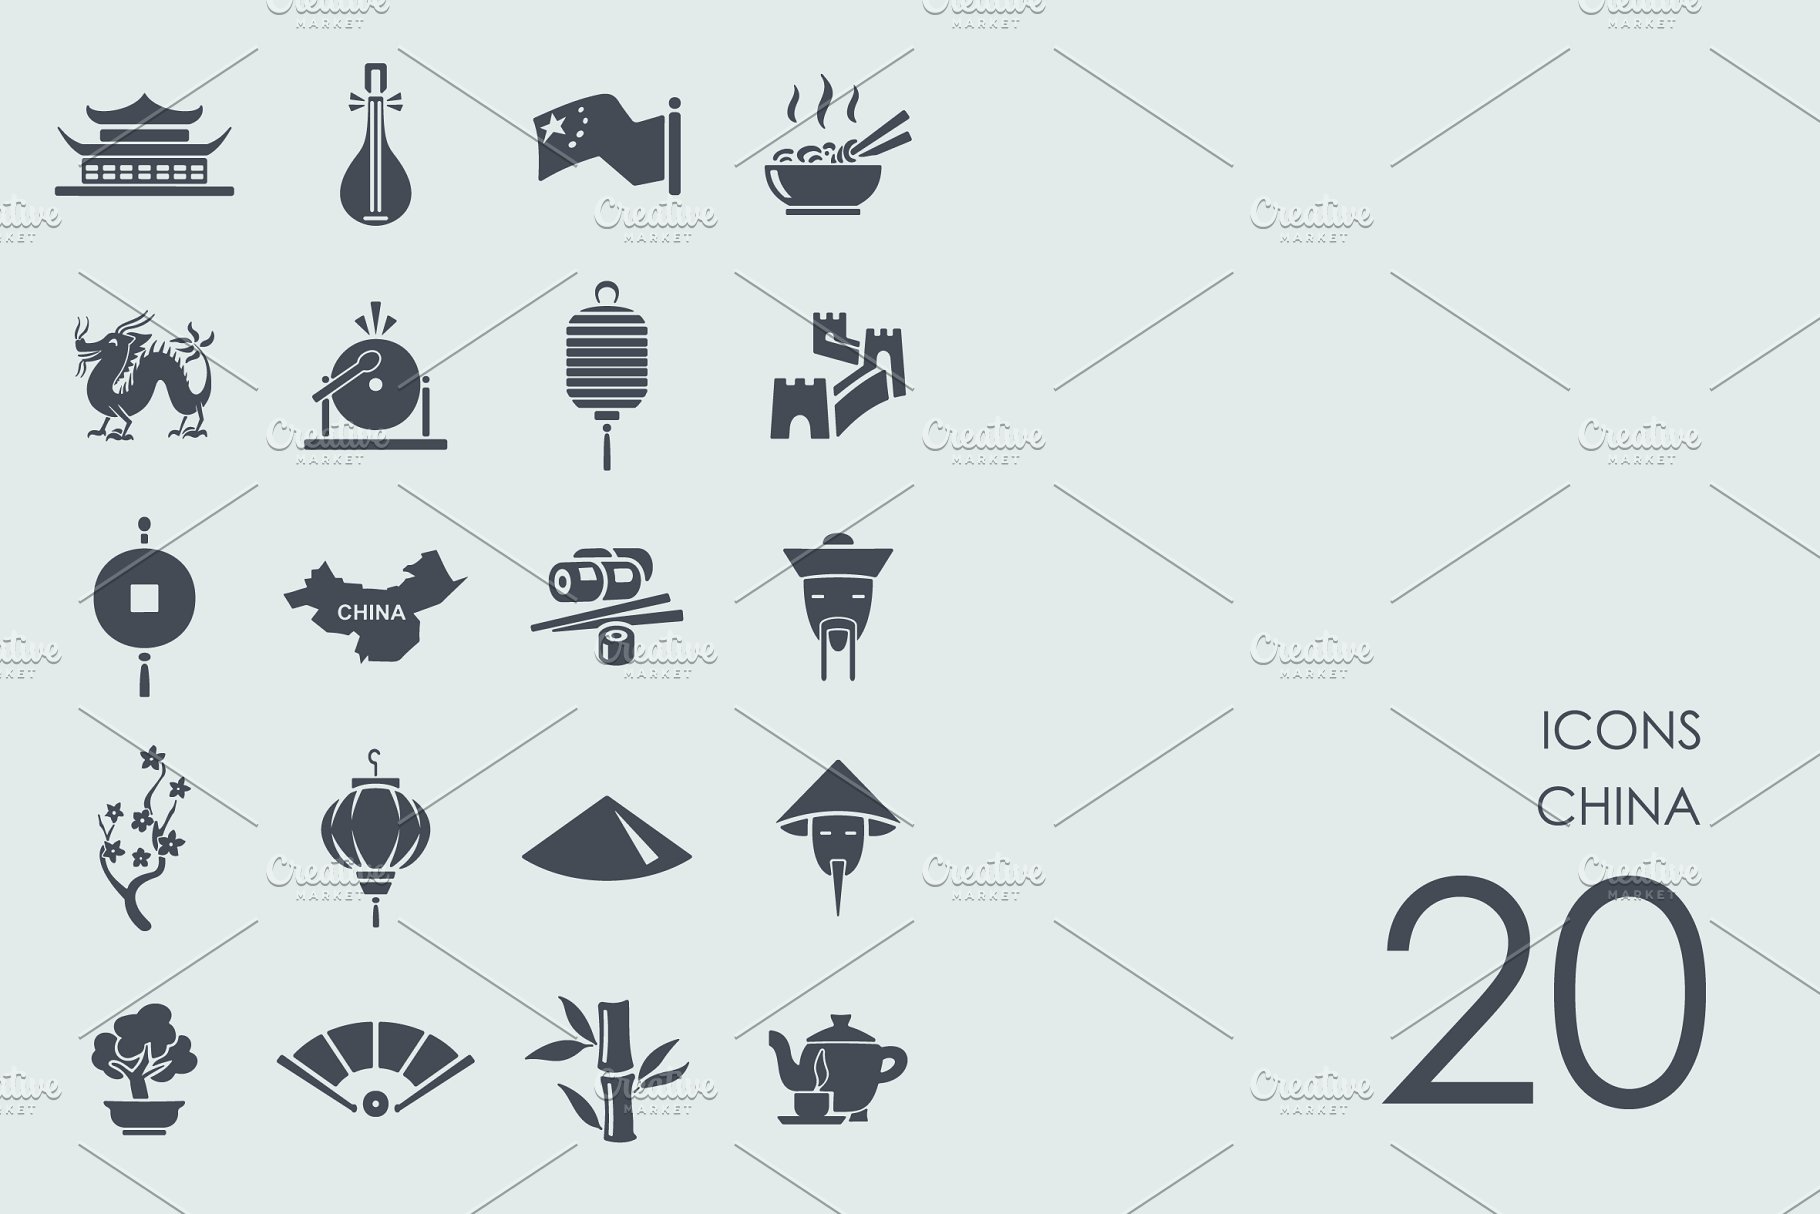 中国民族元素图标素材 China icons